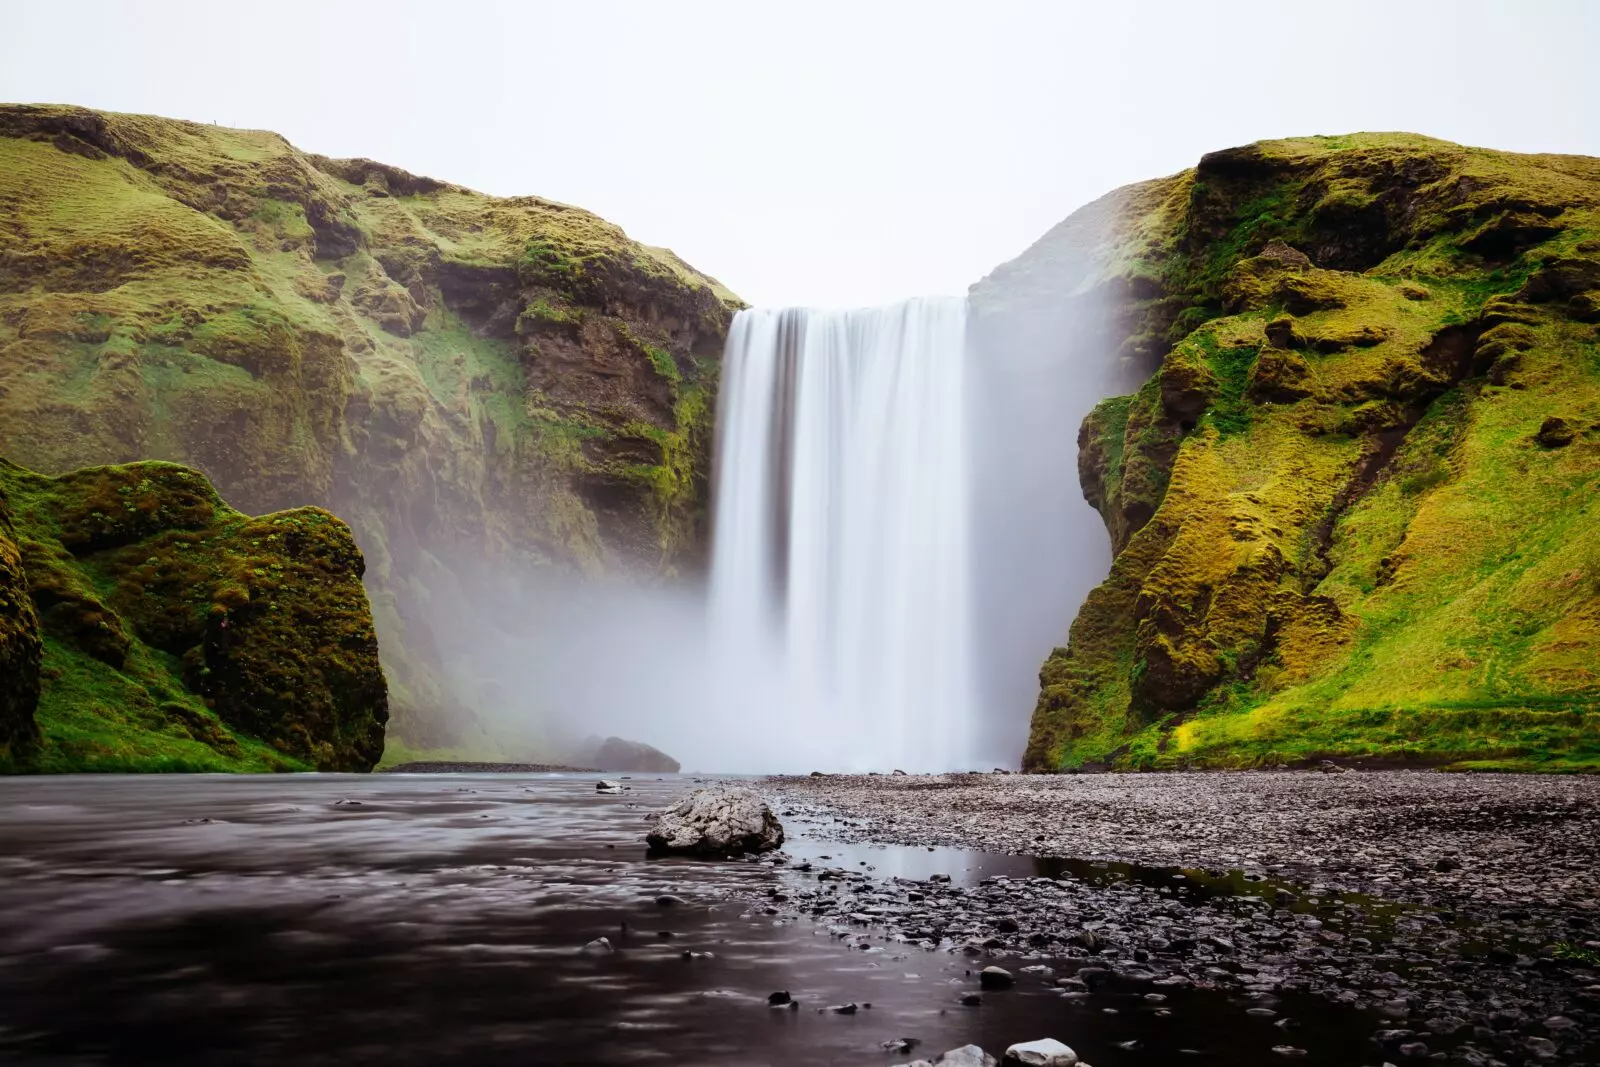 Iceland photo tours - Skogafoss waterfall